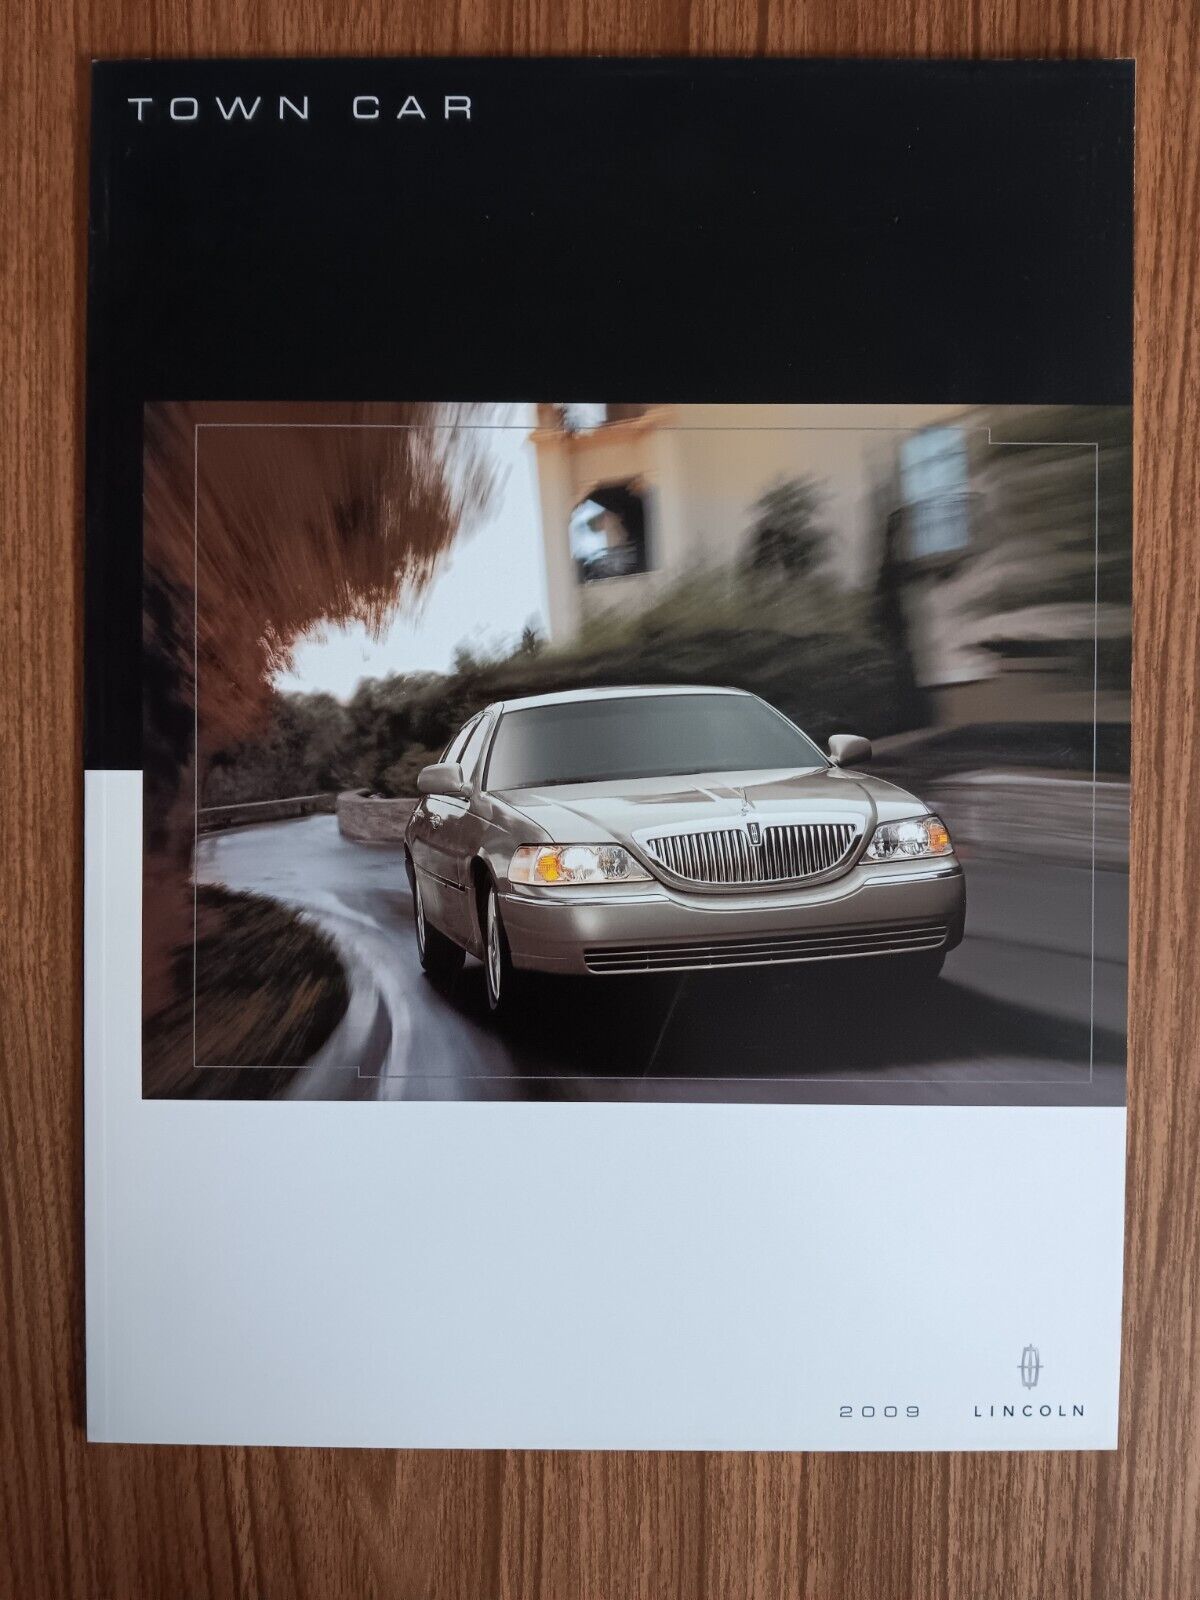 2009 Lincoln Town Car Dealership Advertising Brochure